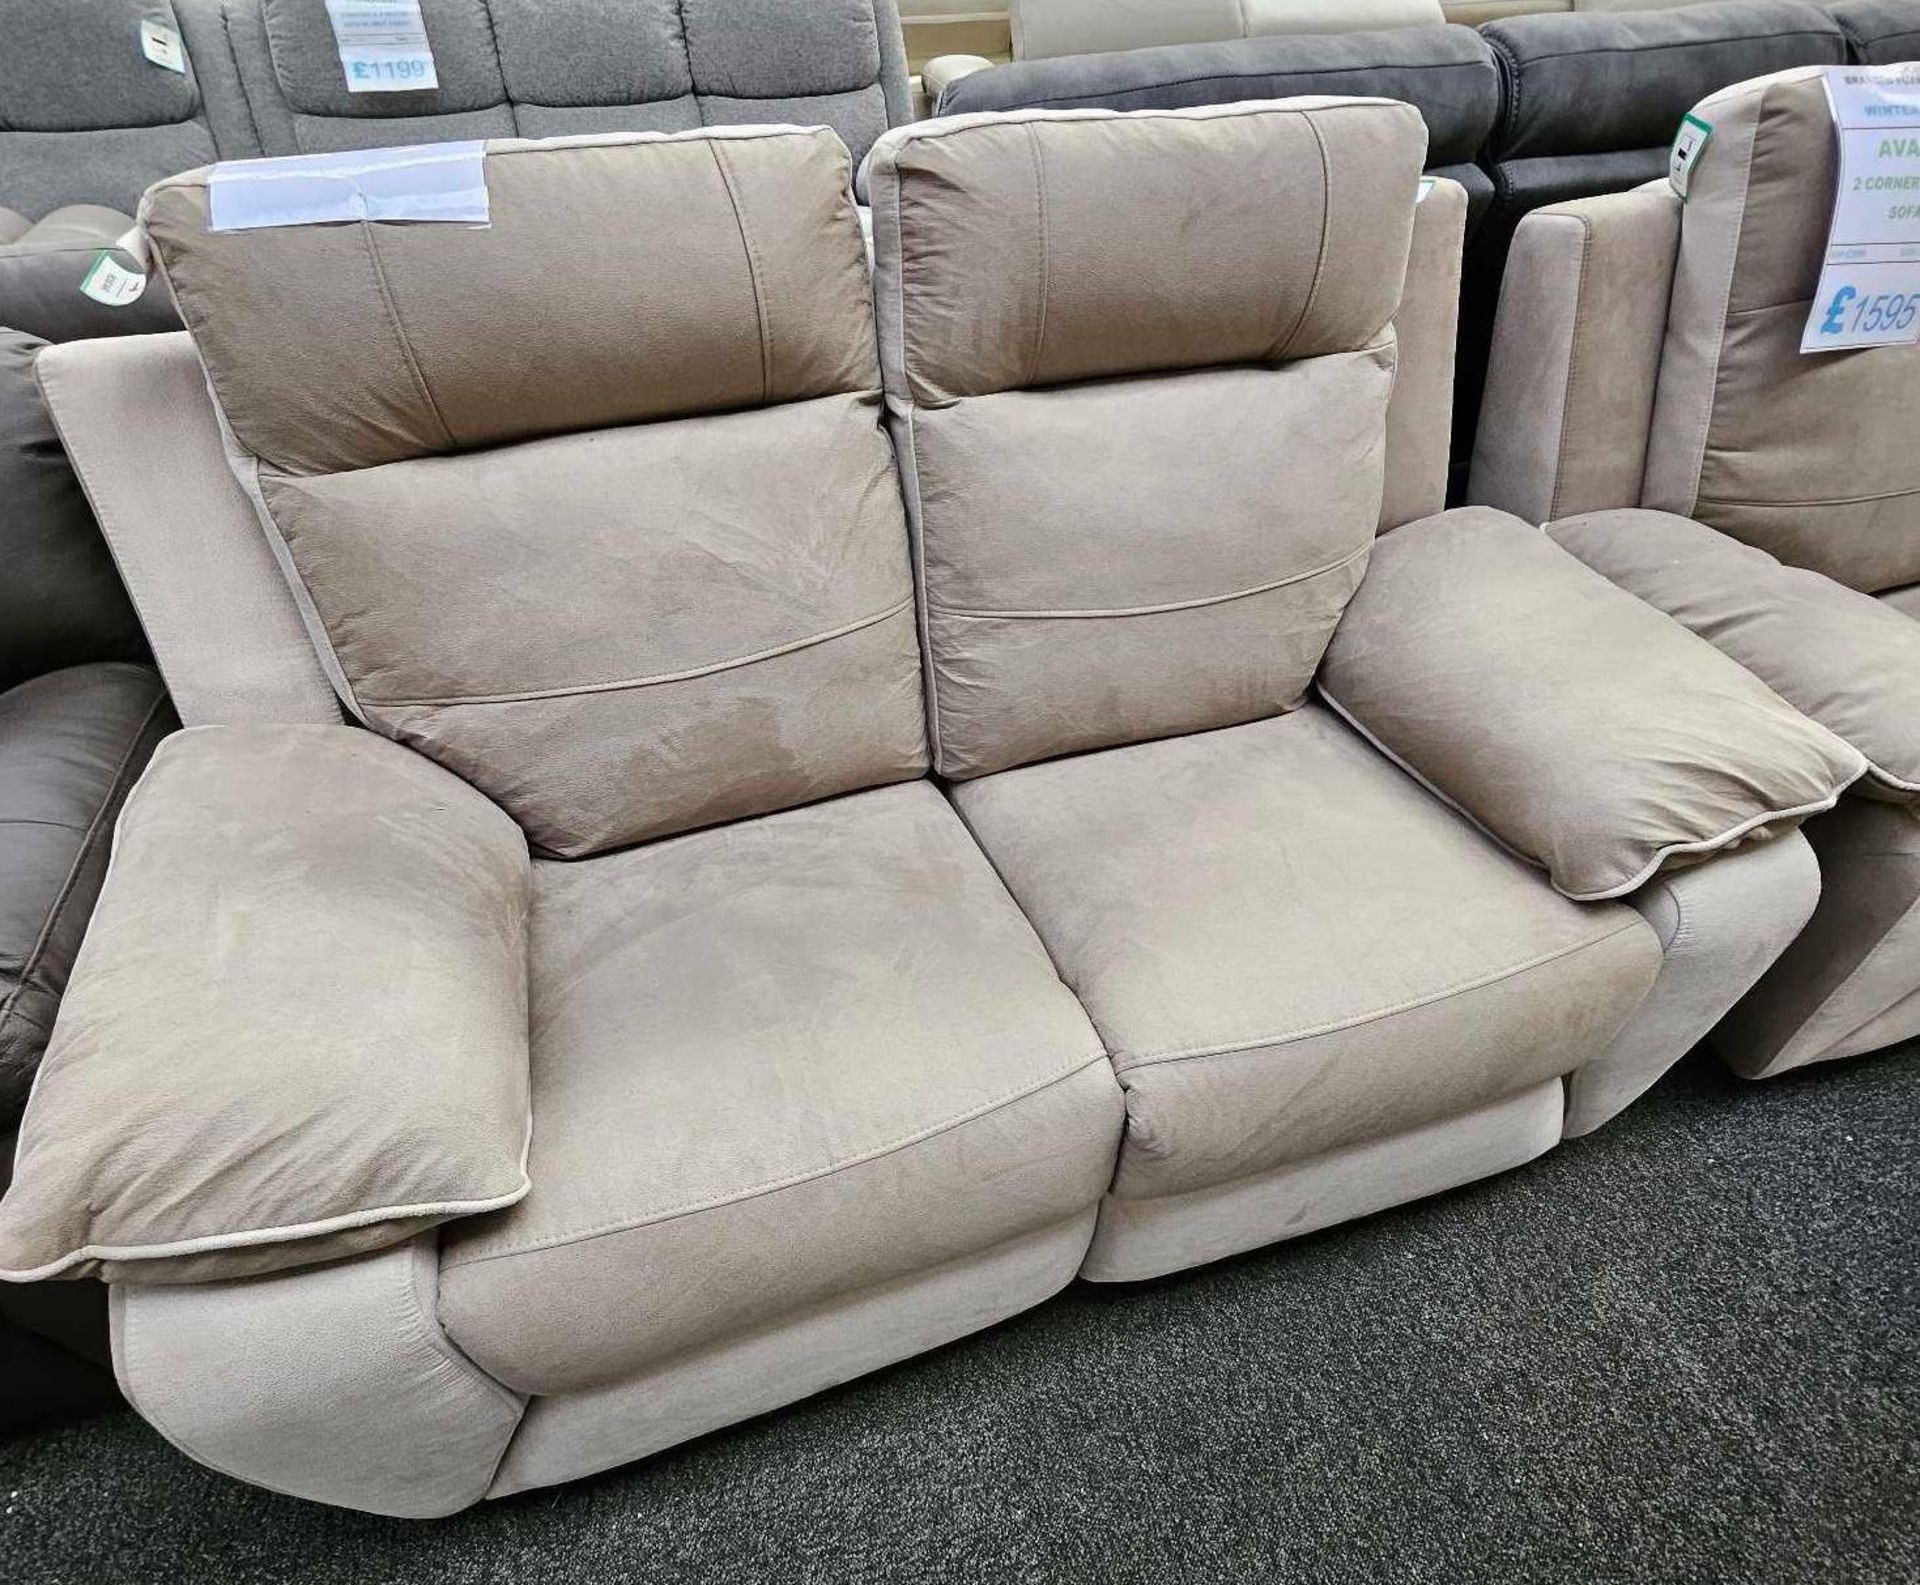 *EX DISPLAY* Sofa house Avanti 2 seater manual recliner sofa in two tone biscuit.